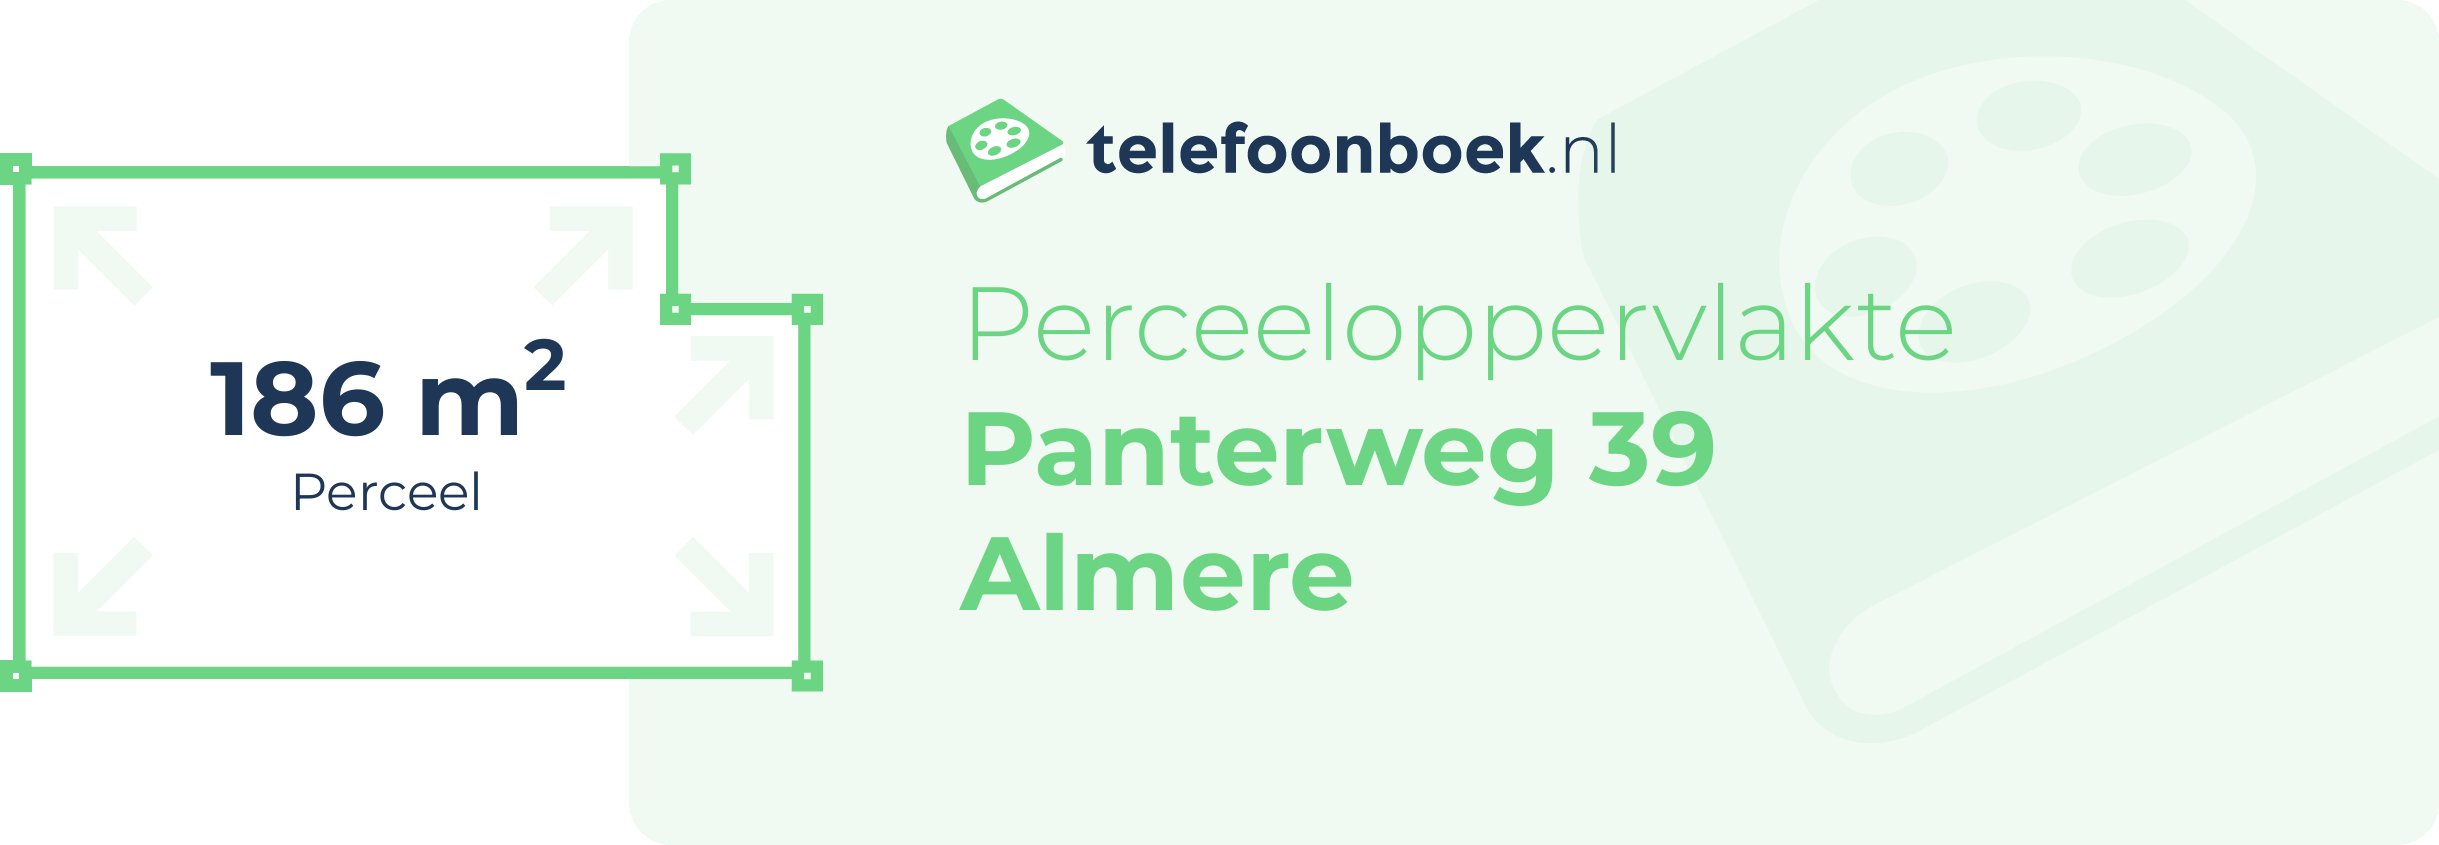 Perceeloppervlakte Panterweg 39 Almere